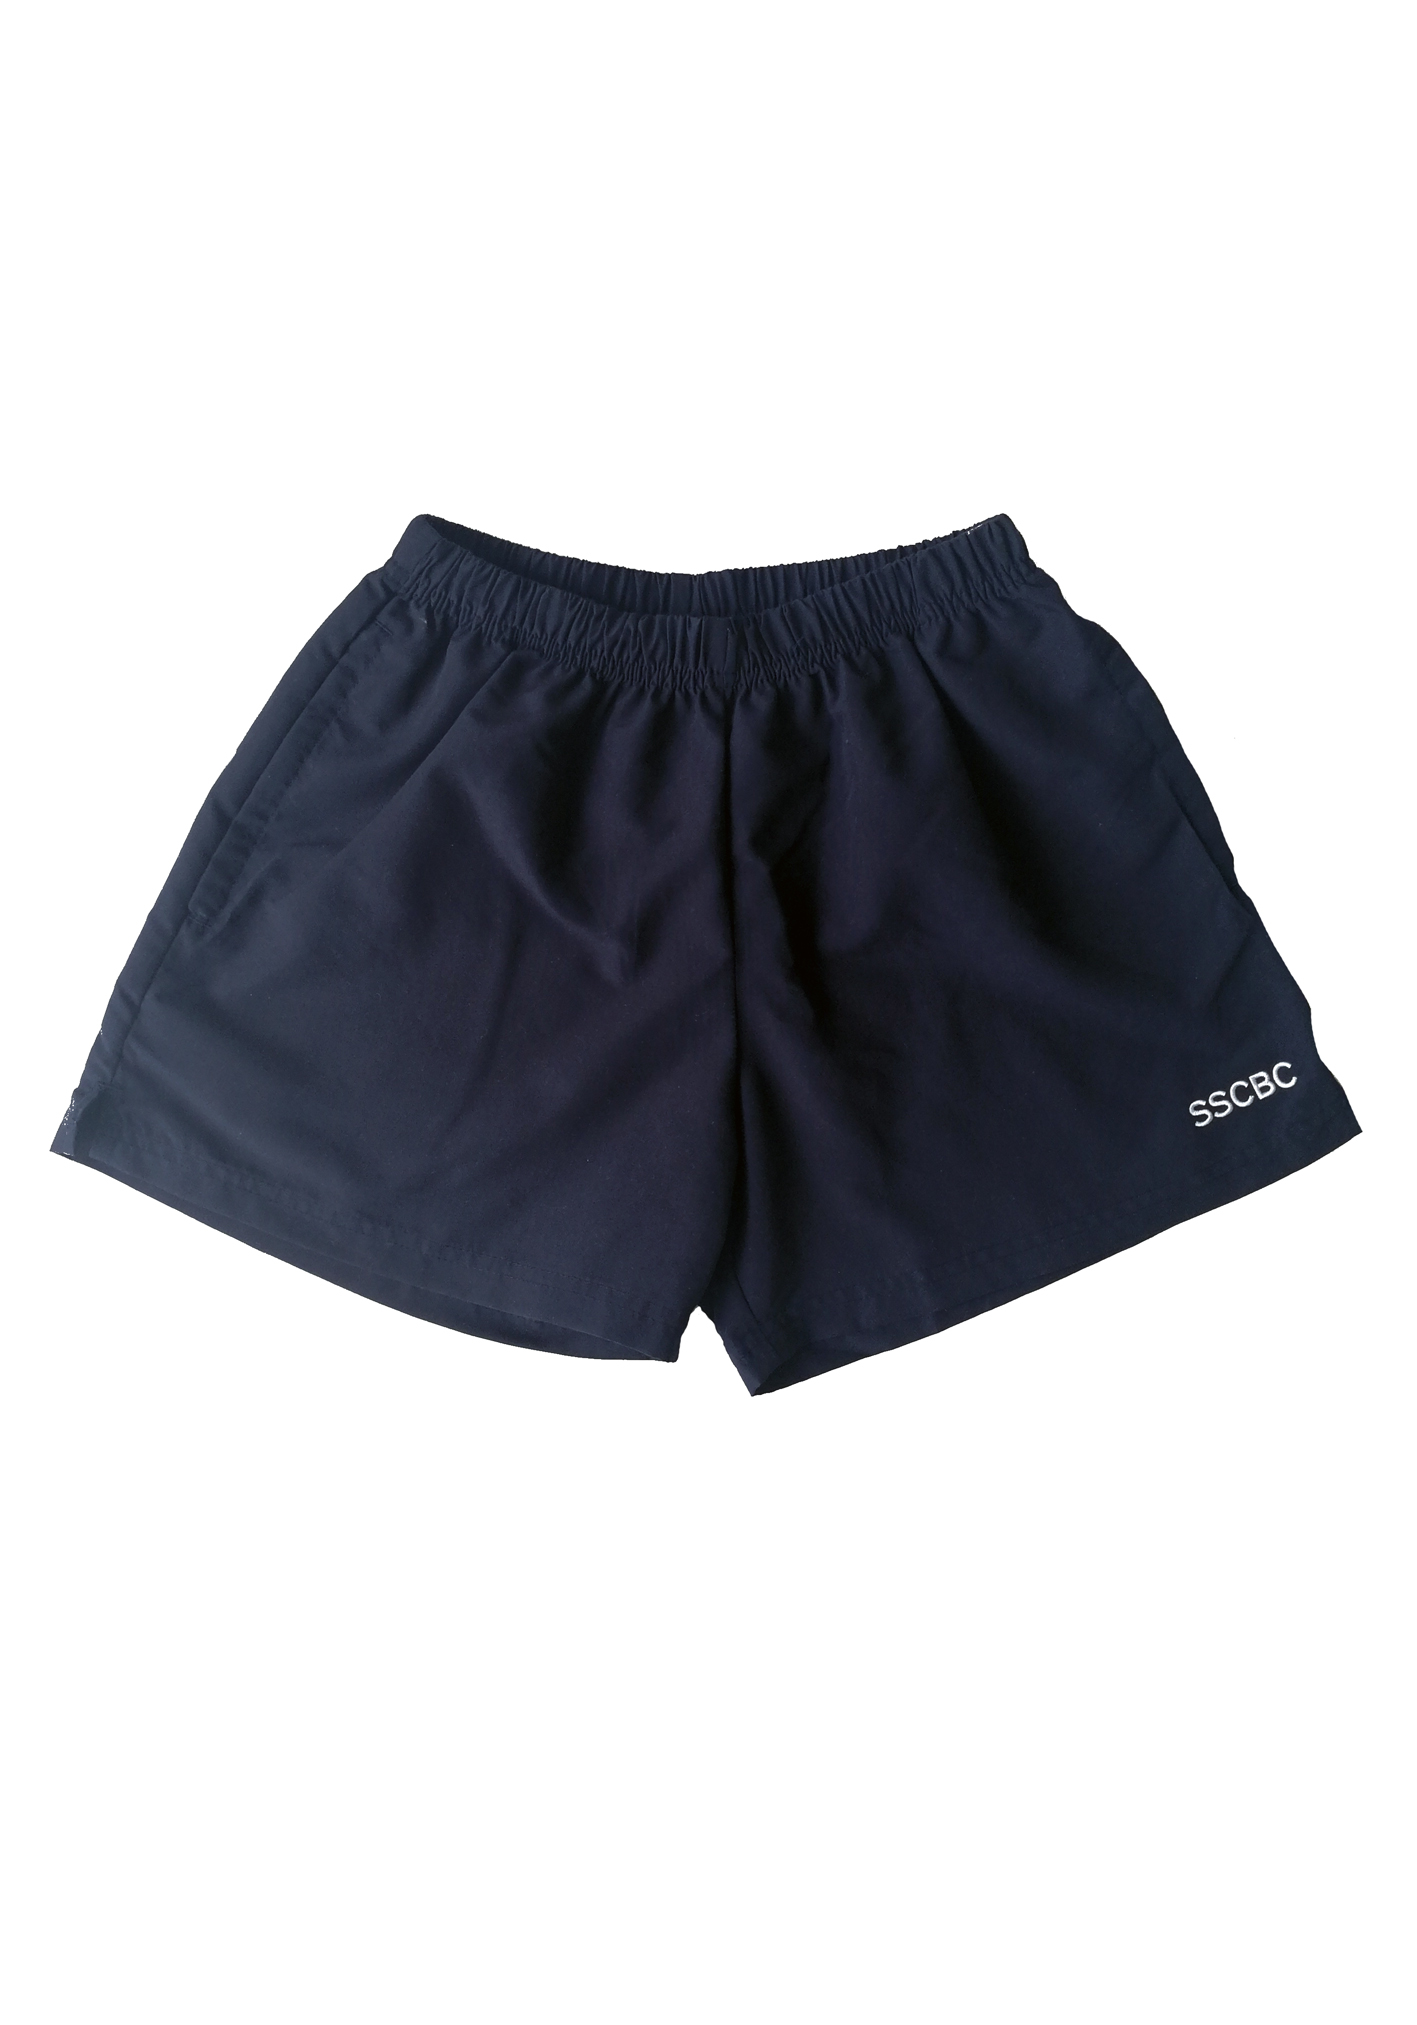 Ssc Balmain Sports Shorts (Short Leg) Navy With Embroidery | Shop at ...